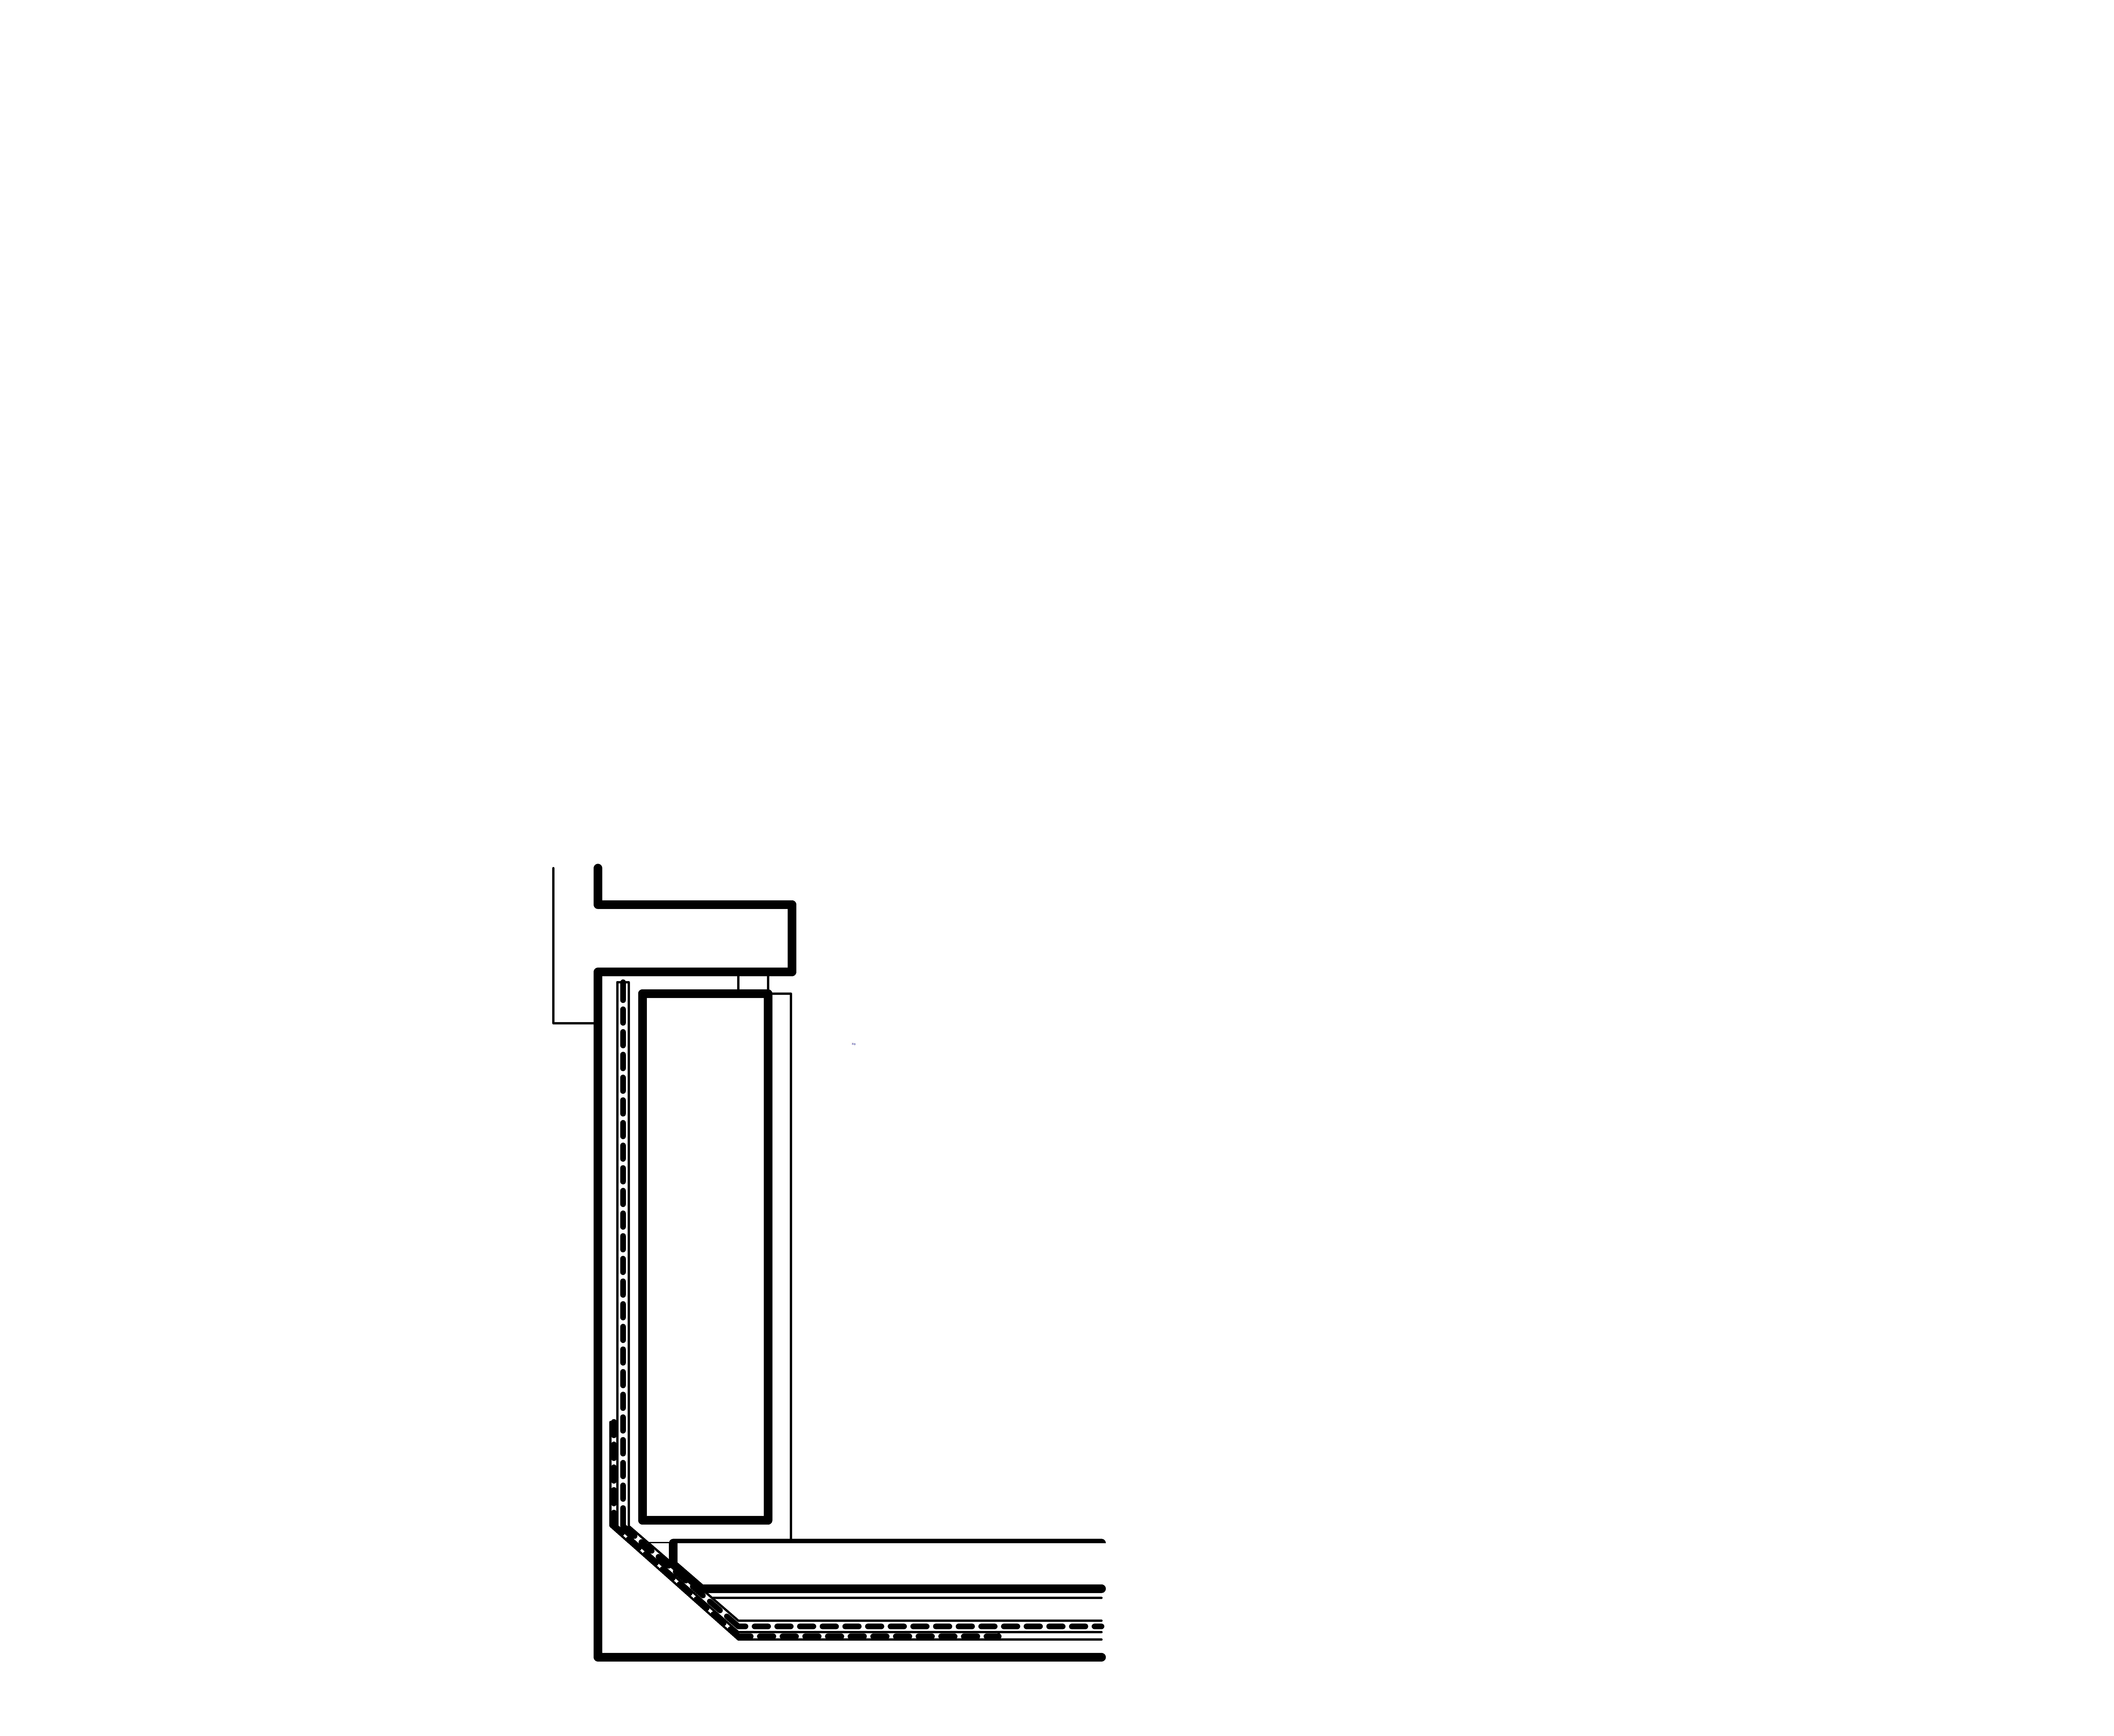 A_找坡-无保温-刚性-用于砼墙-有保护墙-砼盖板居中